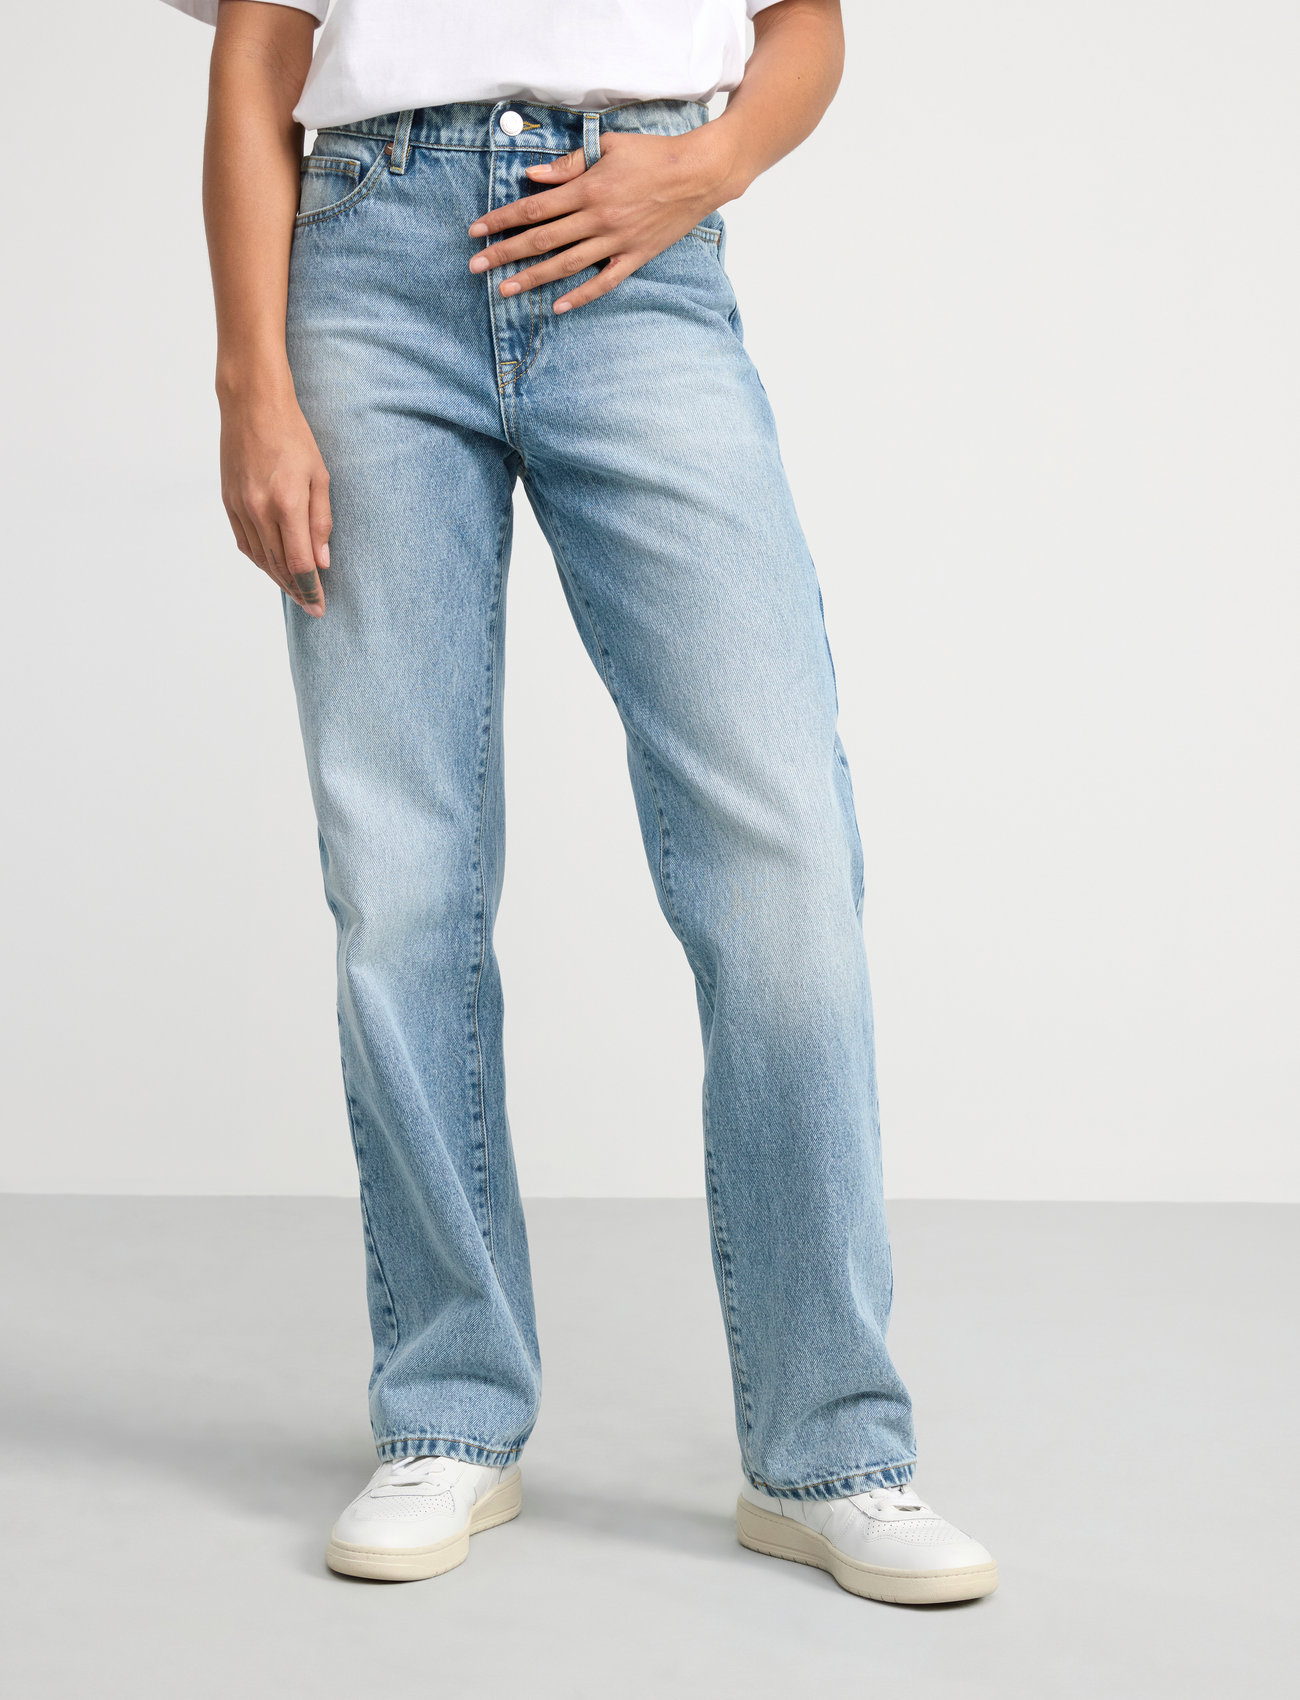 Lindex - Trouser denim Pam lt blue - mom jeans - light denim - 0